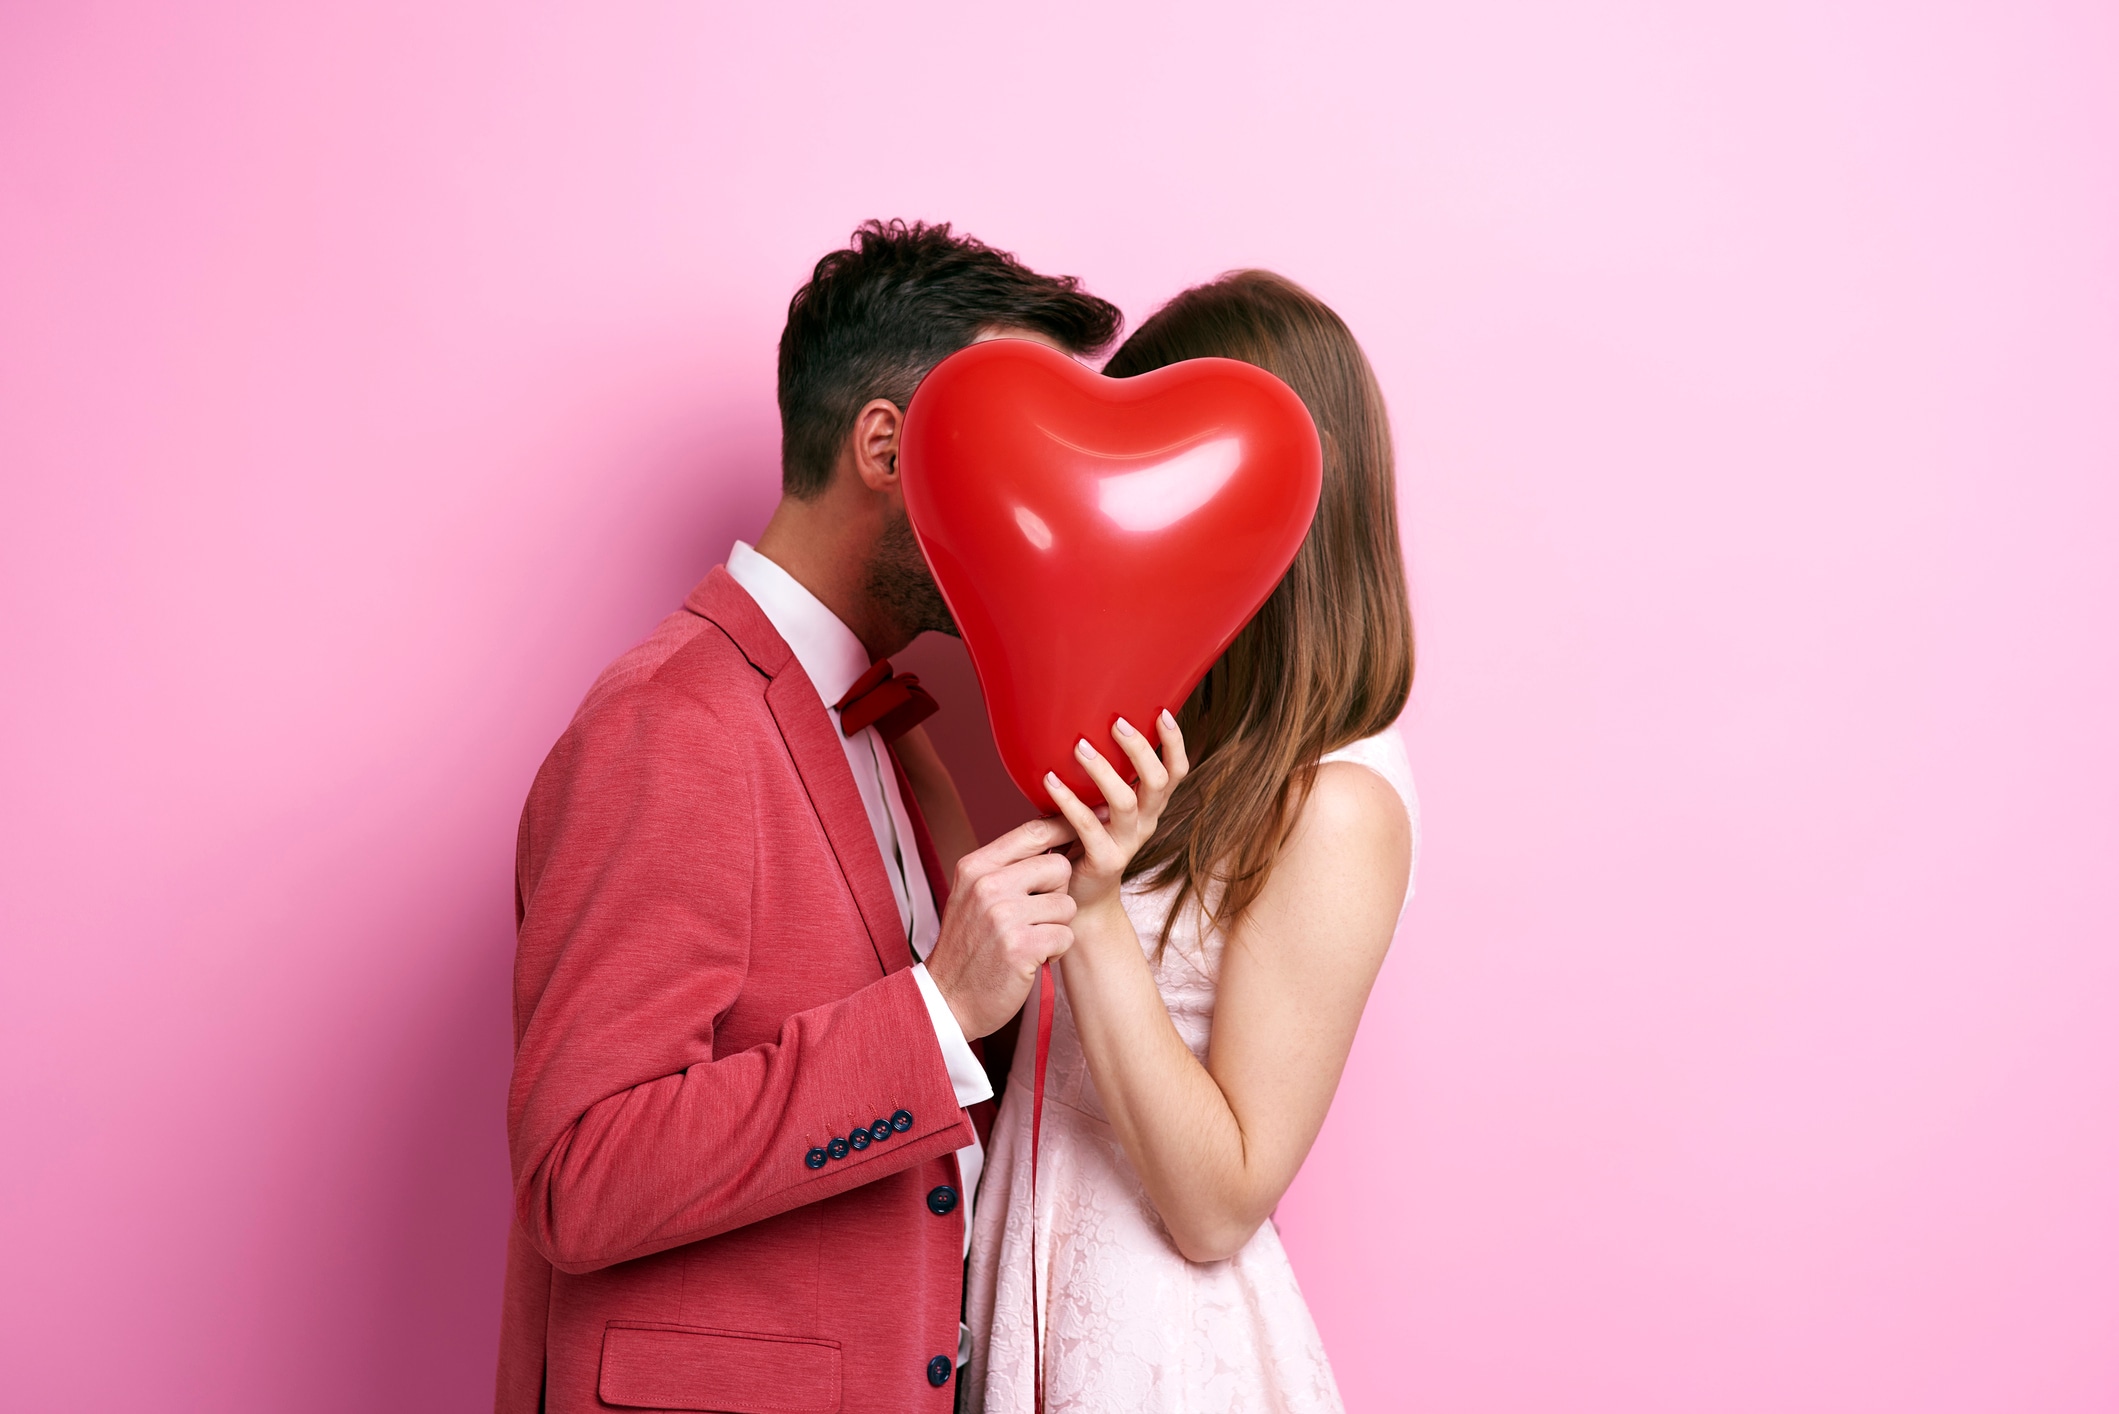 Mount Bank beads loan San Valentino: frasi e aforismi d'amore da dedicare a chi si ama |  Studenti.it